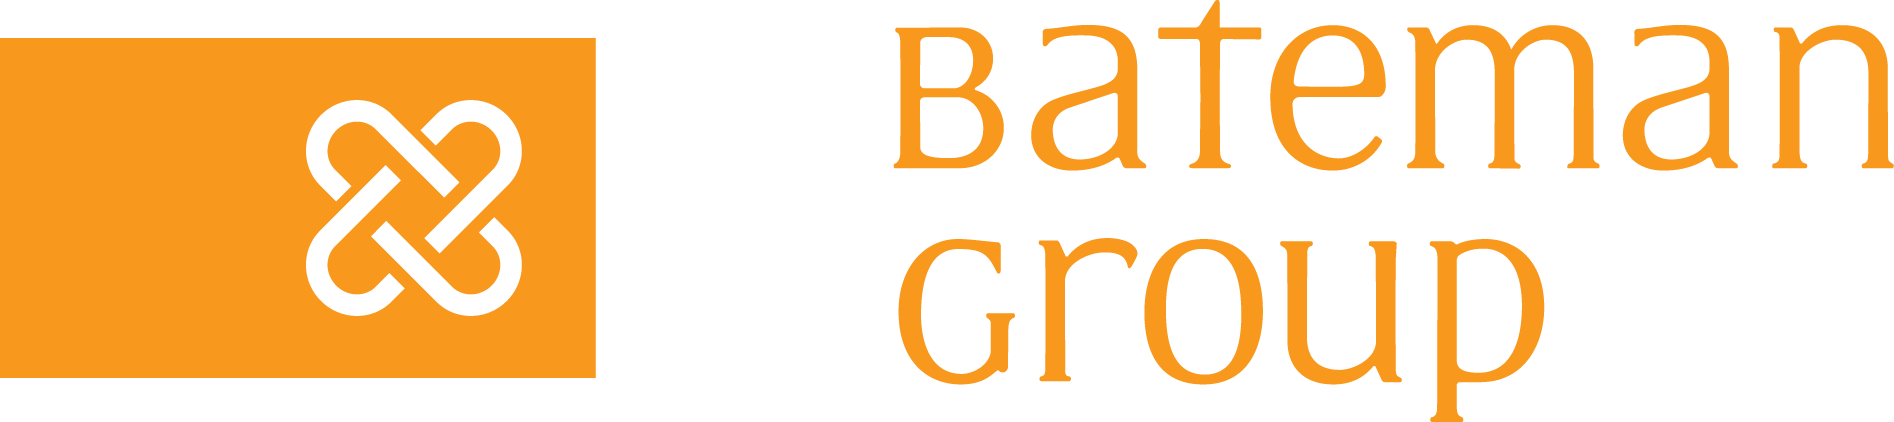 Bateman Group